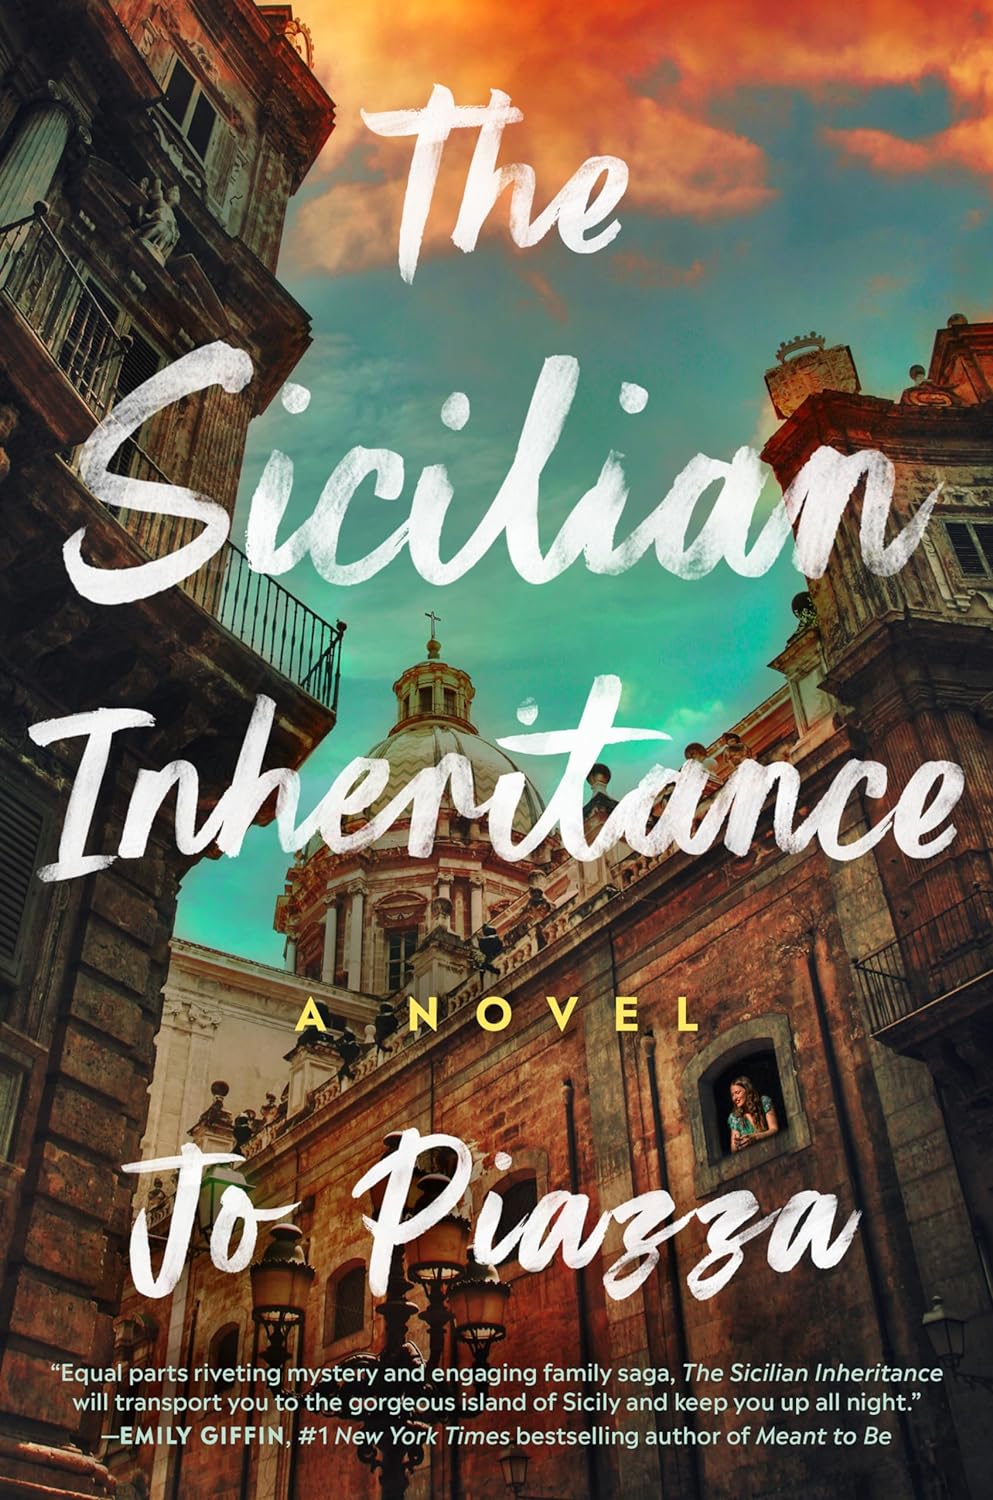 Image for "The Sicilian Inheritance"